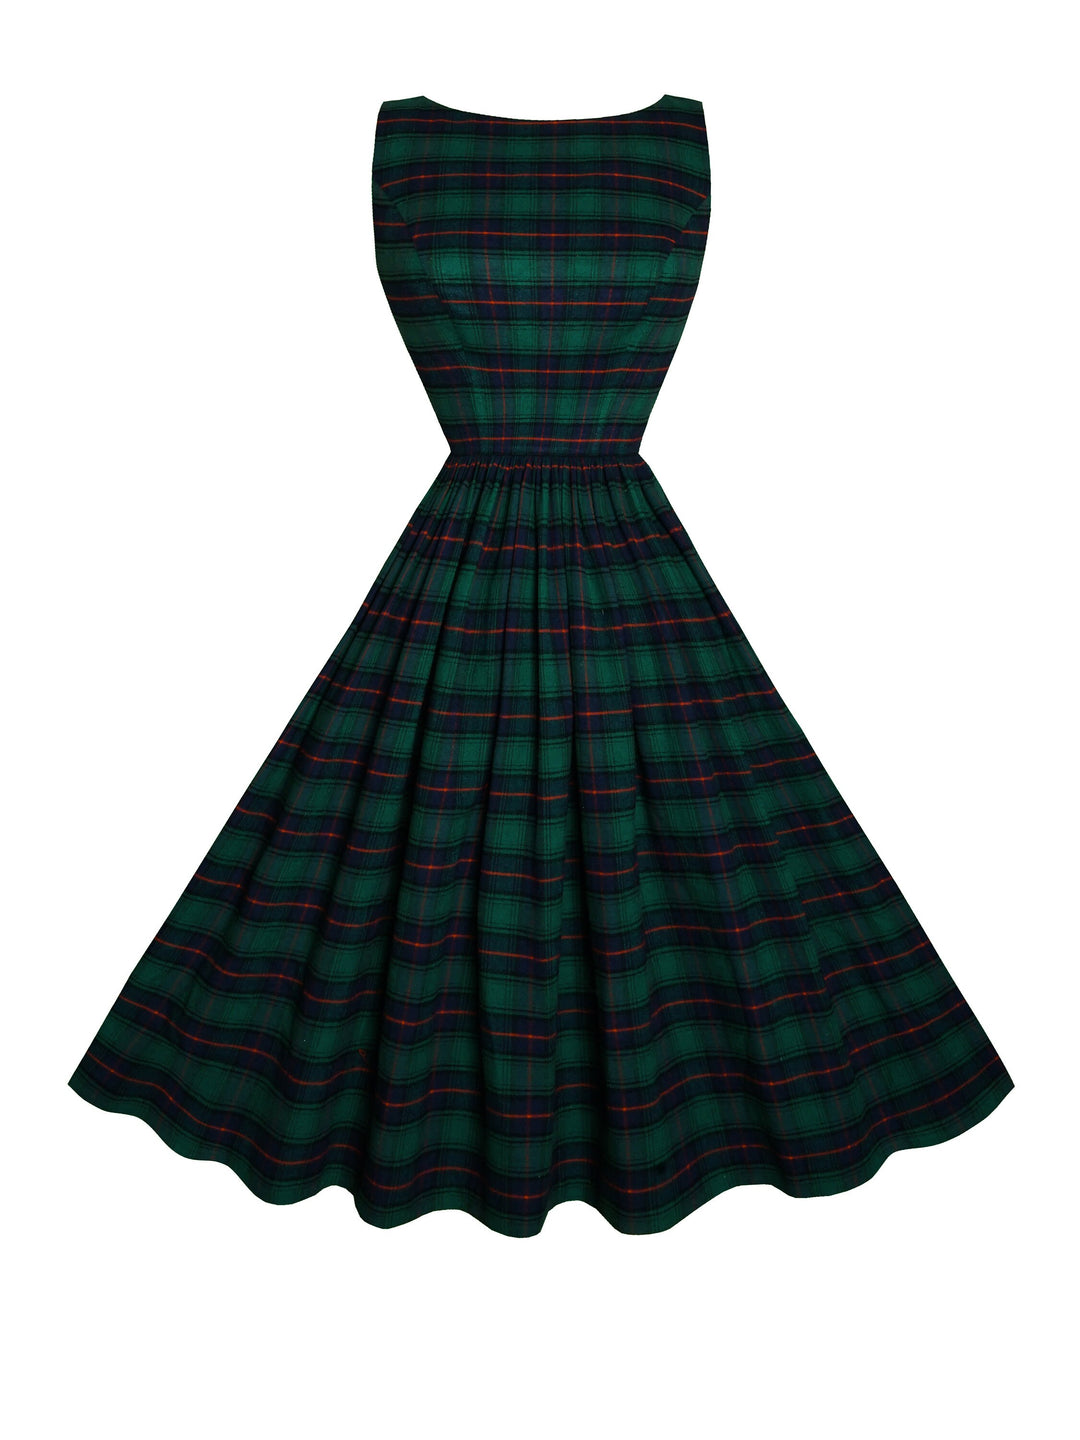 MTO - Audrey Dress "Princeton Plaid"